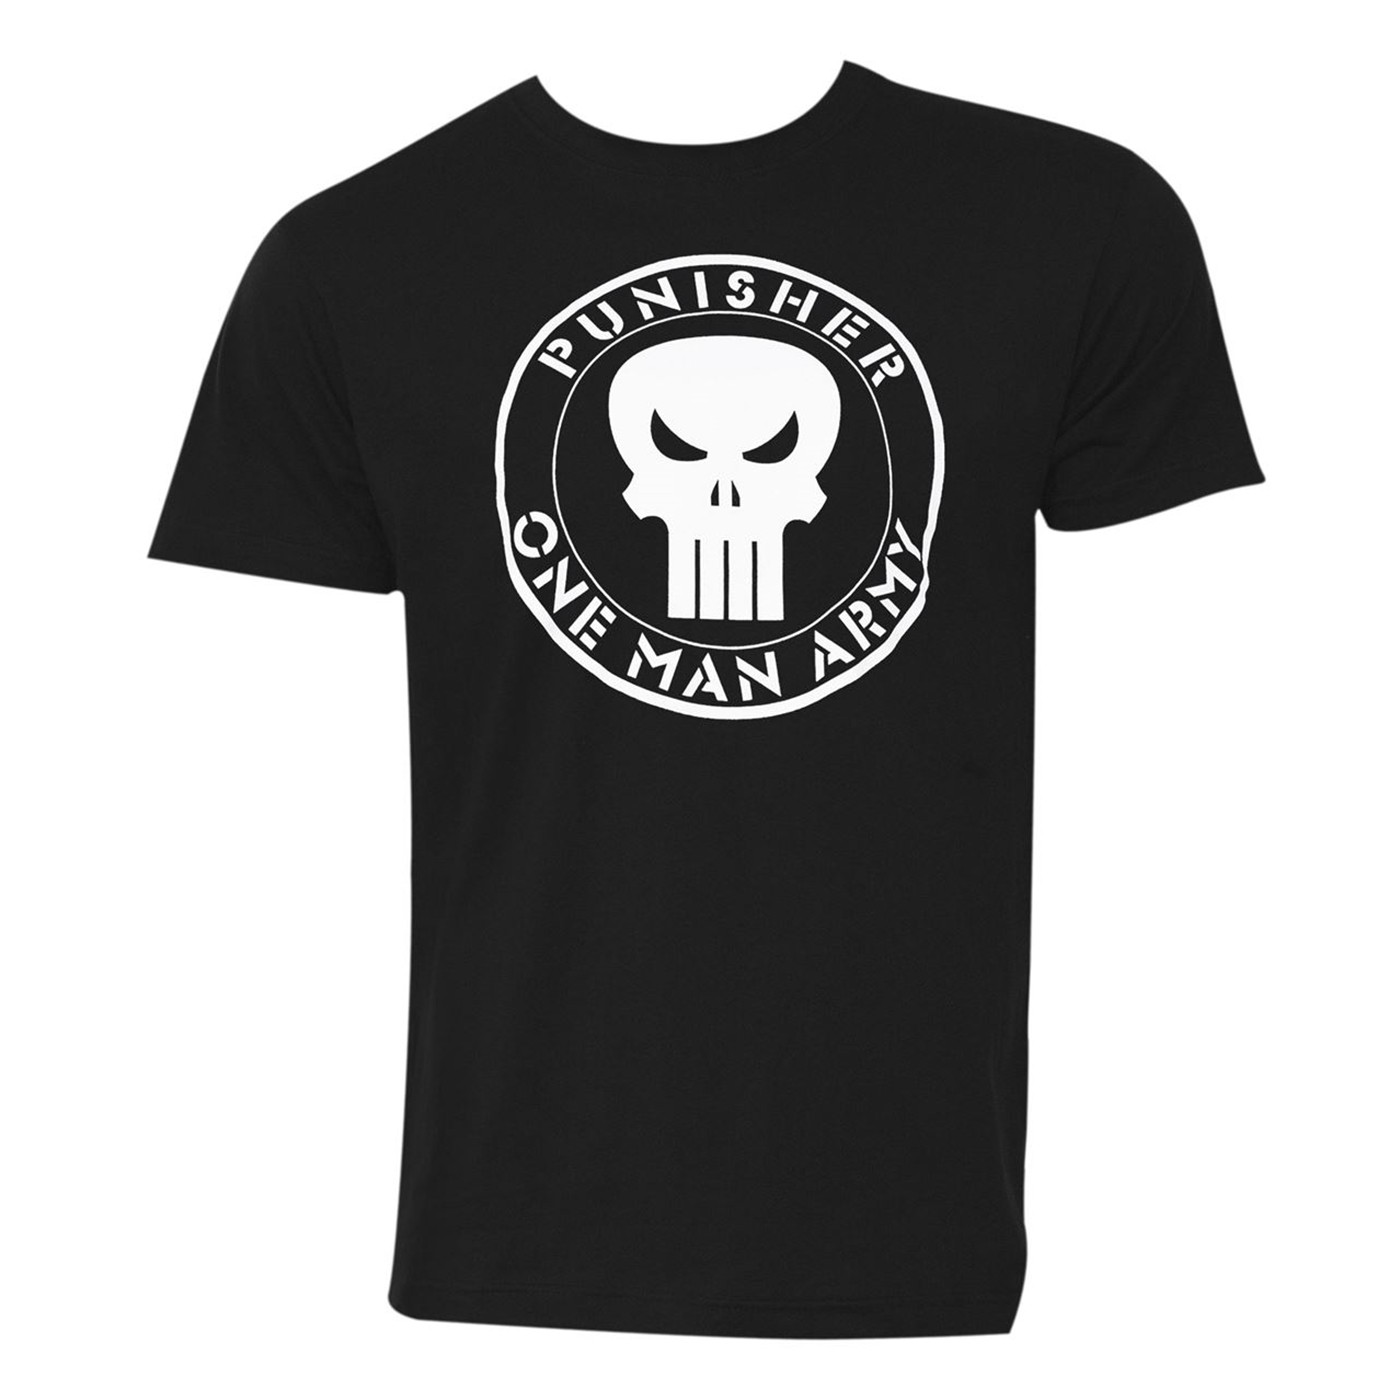 Punisher One Man Army Black Men's T-Shirt